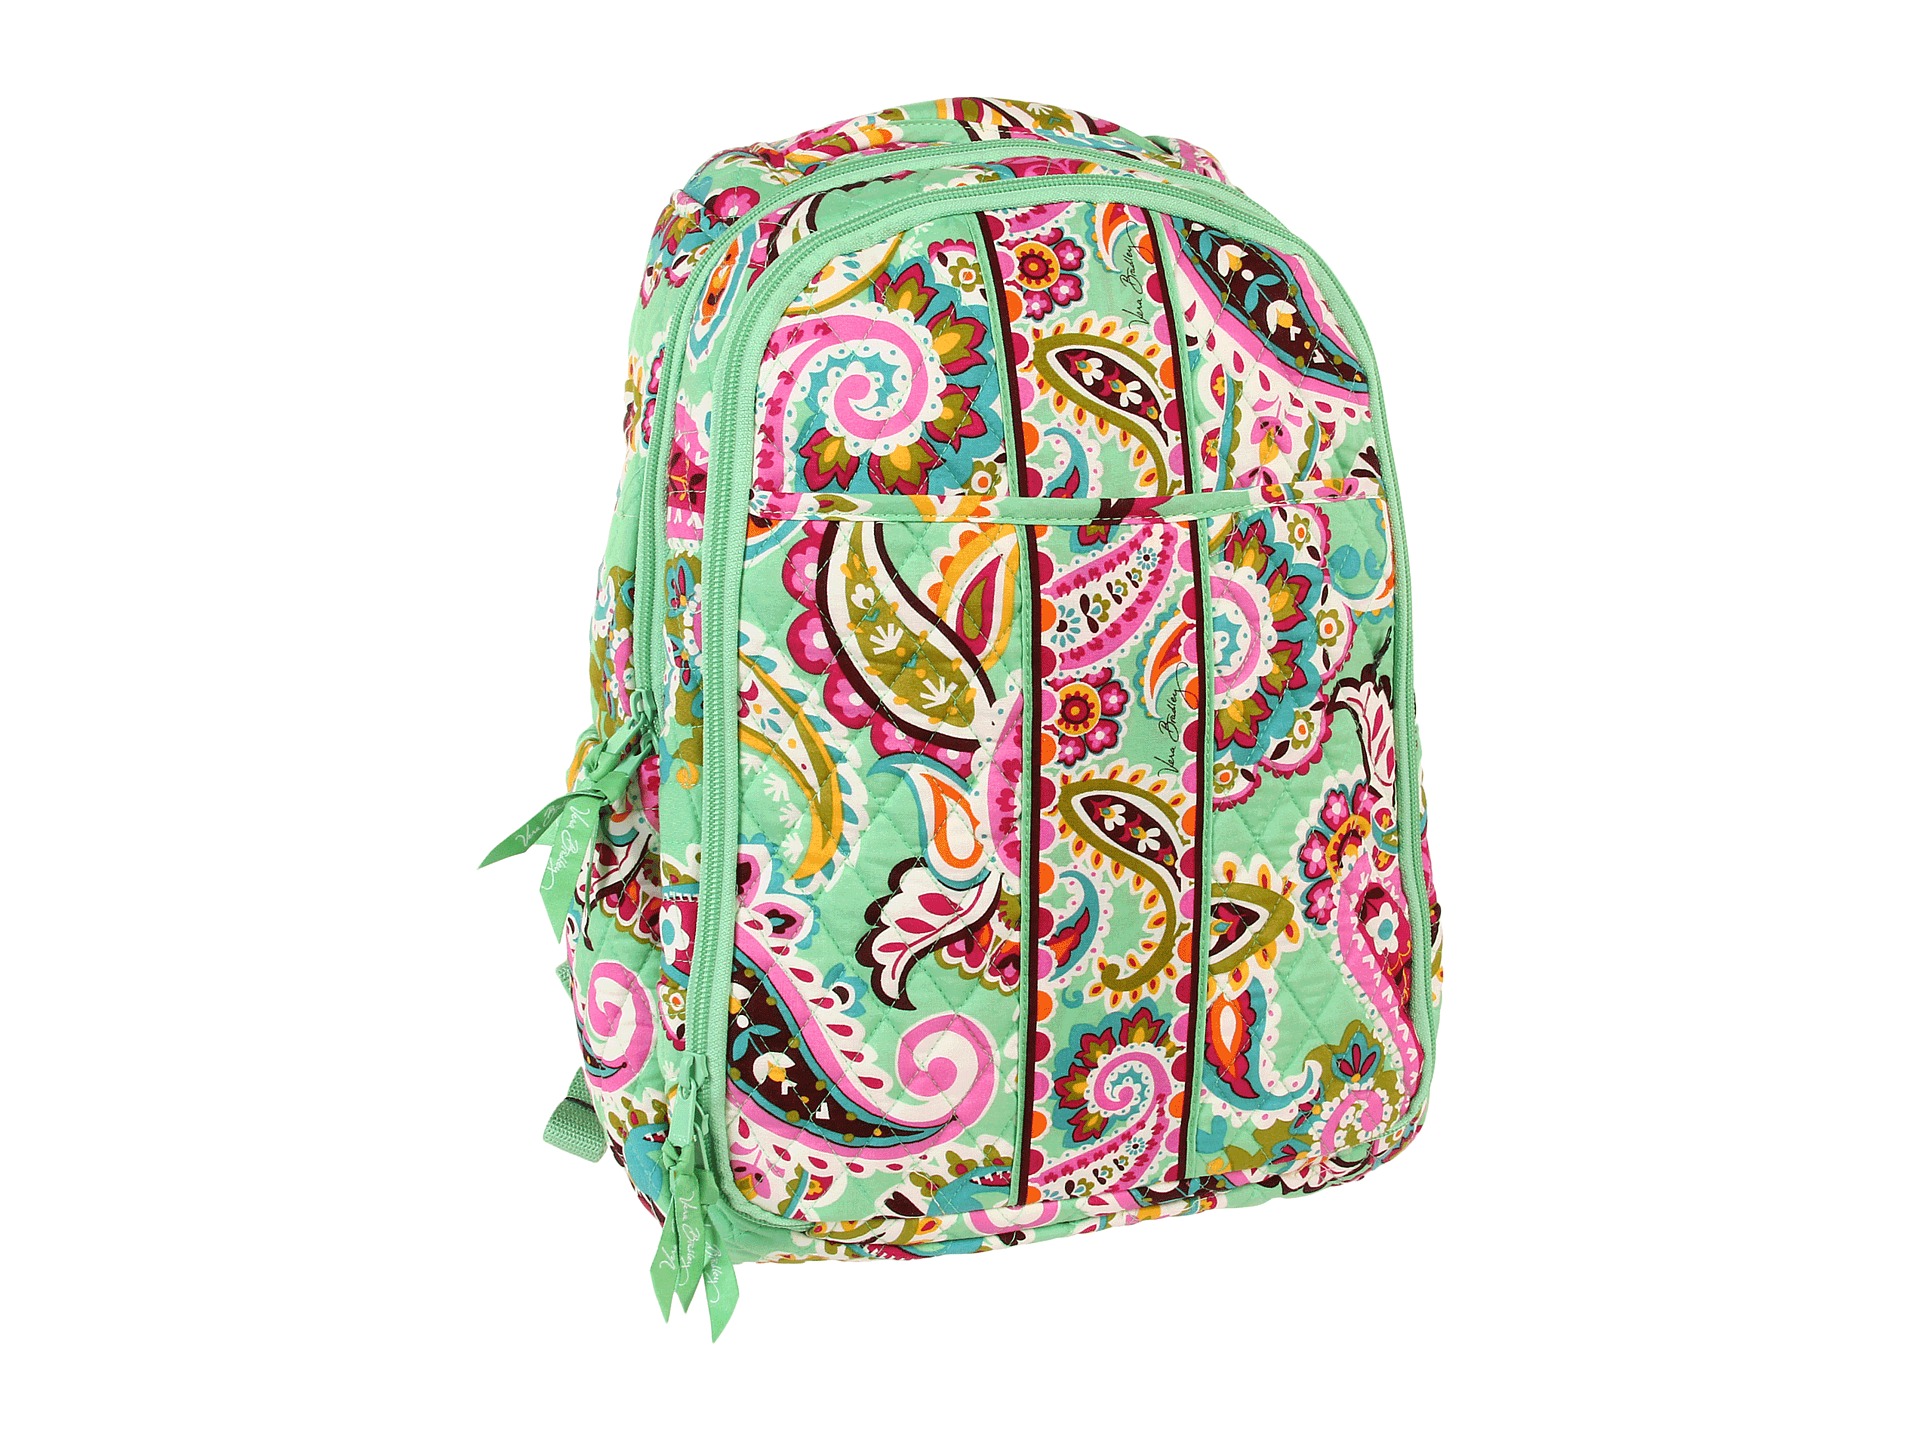 Vera Bradley Backpack Baby Bag, Bags | Shipped Free at Zappos